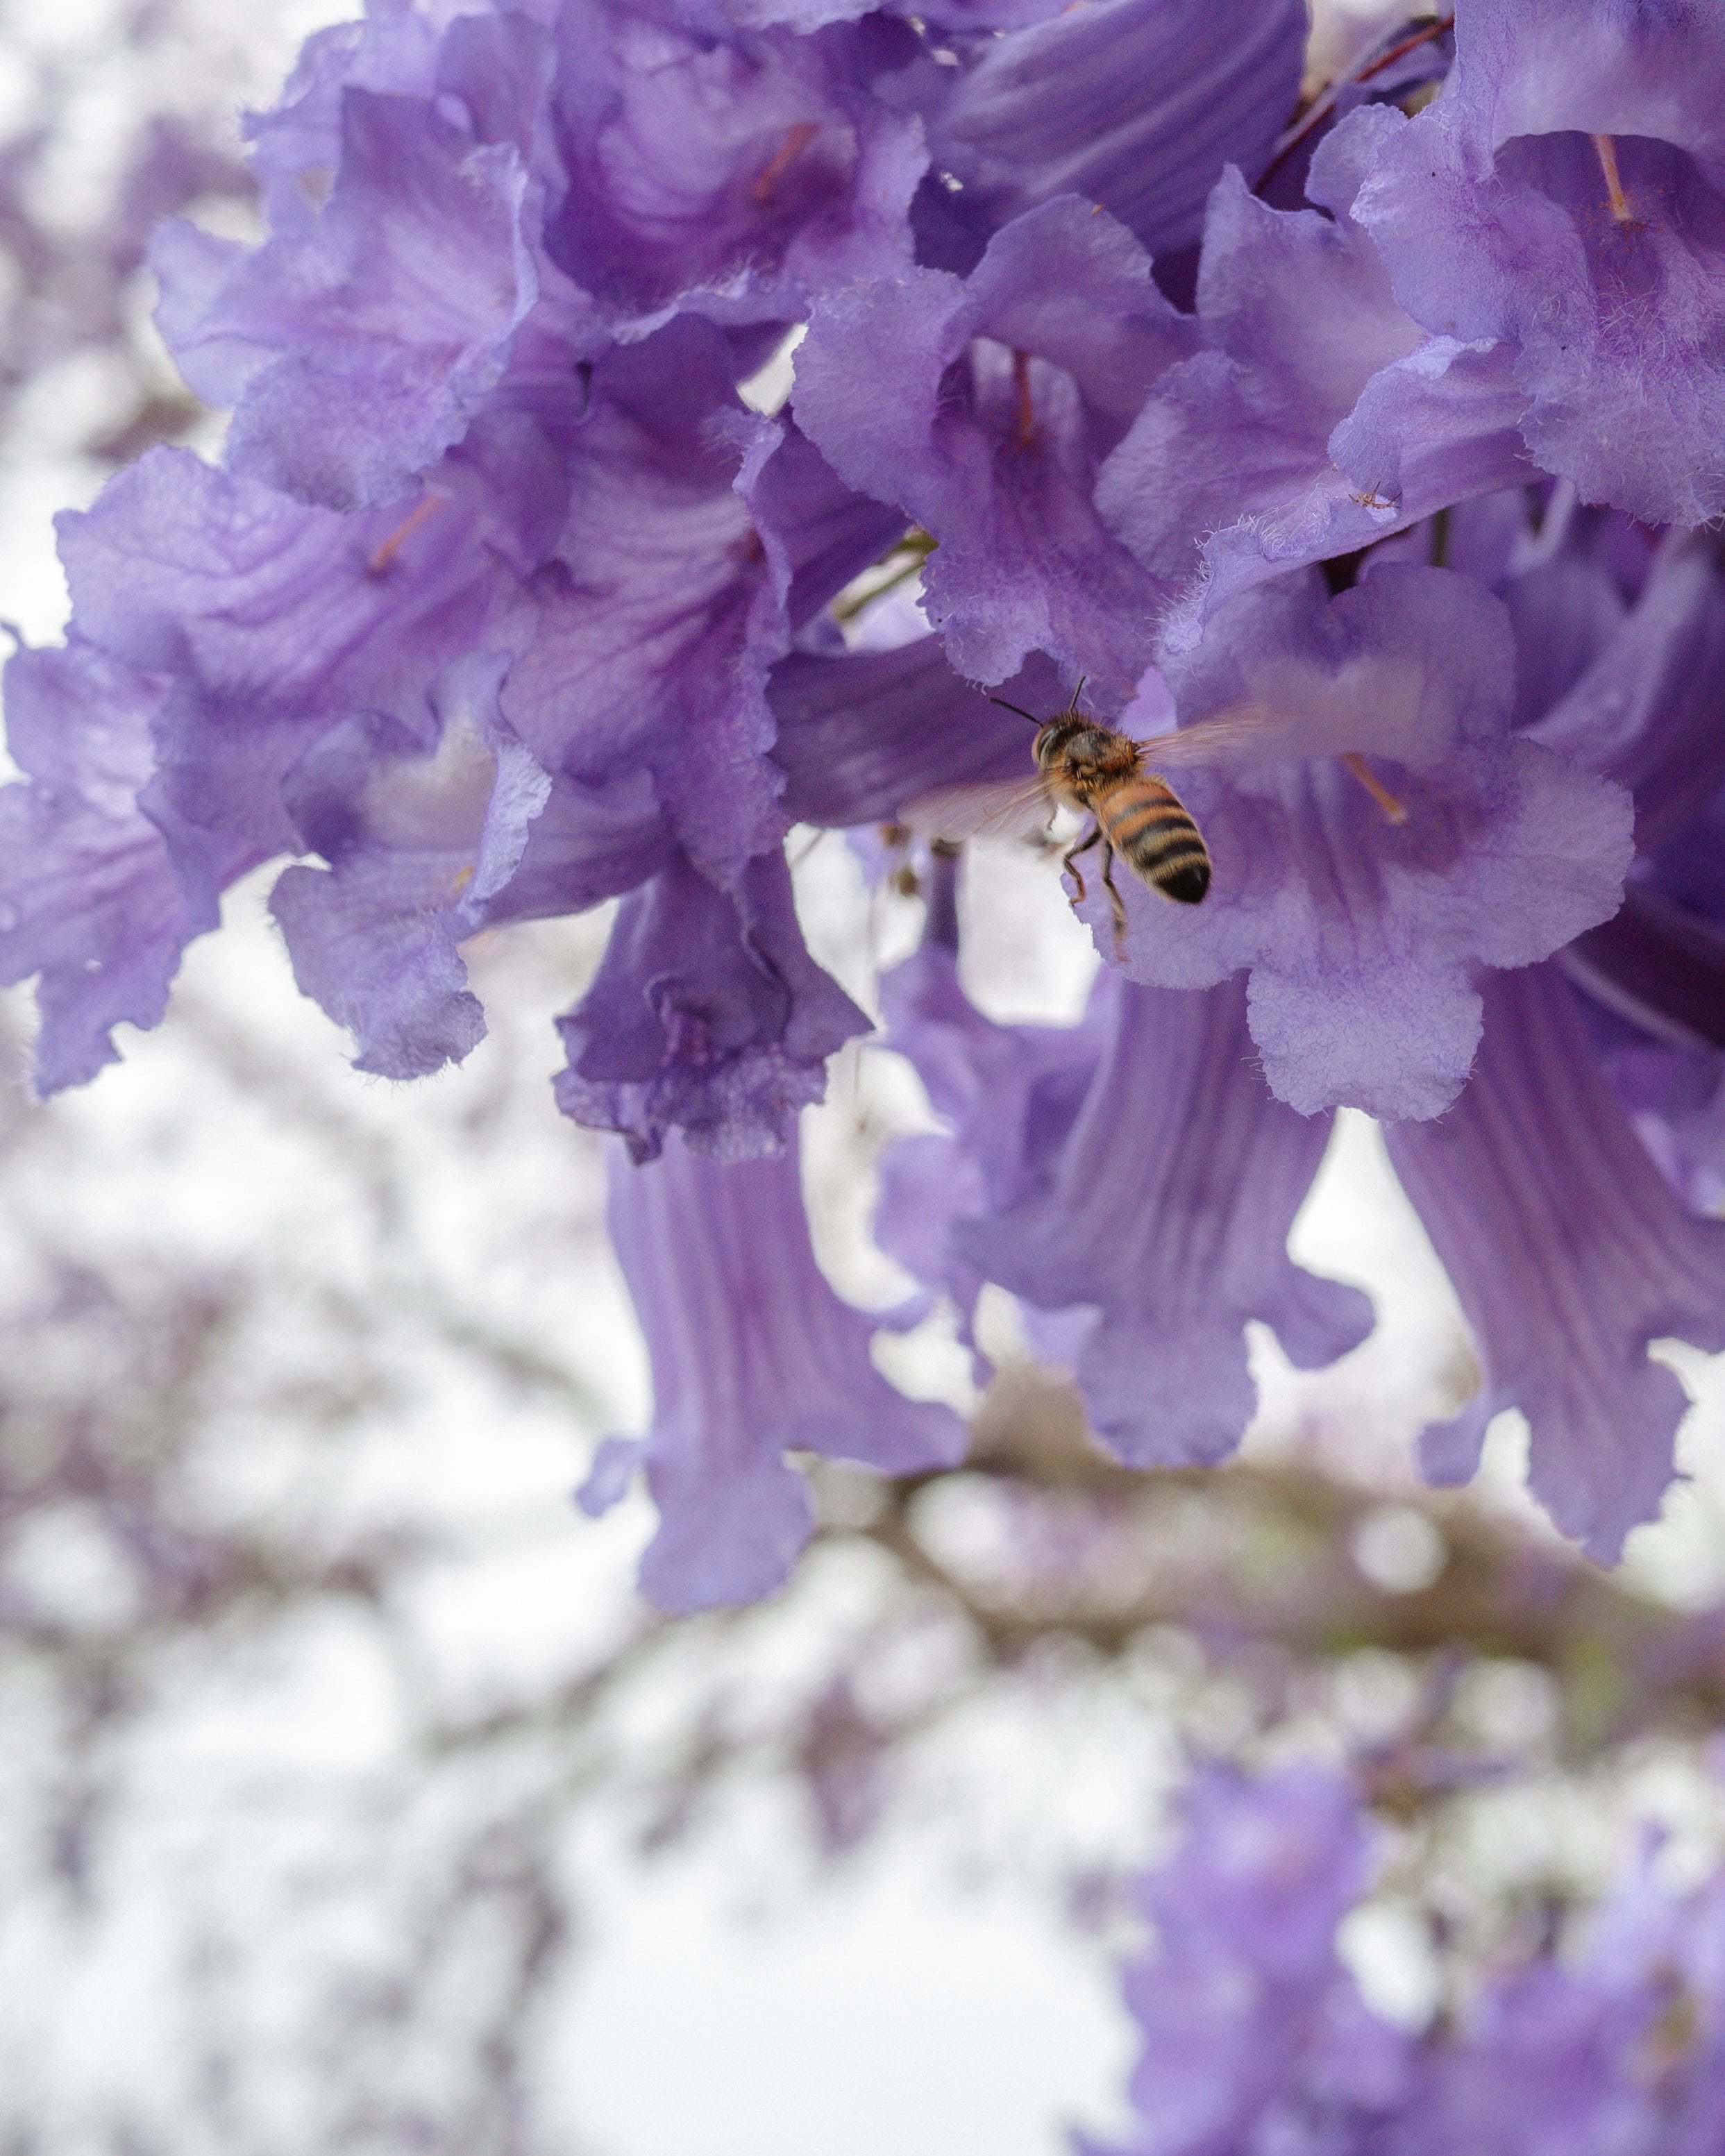 Bumble bee close-up - Jacaranda flower - Grafton - New South Wales (NSW) - Australia